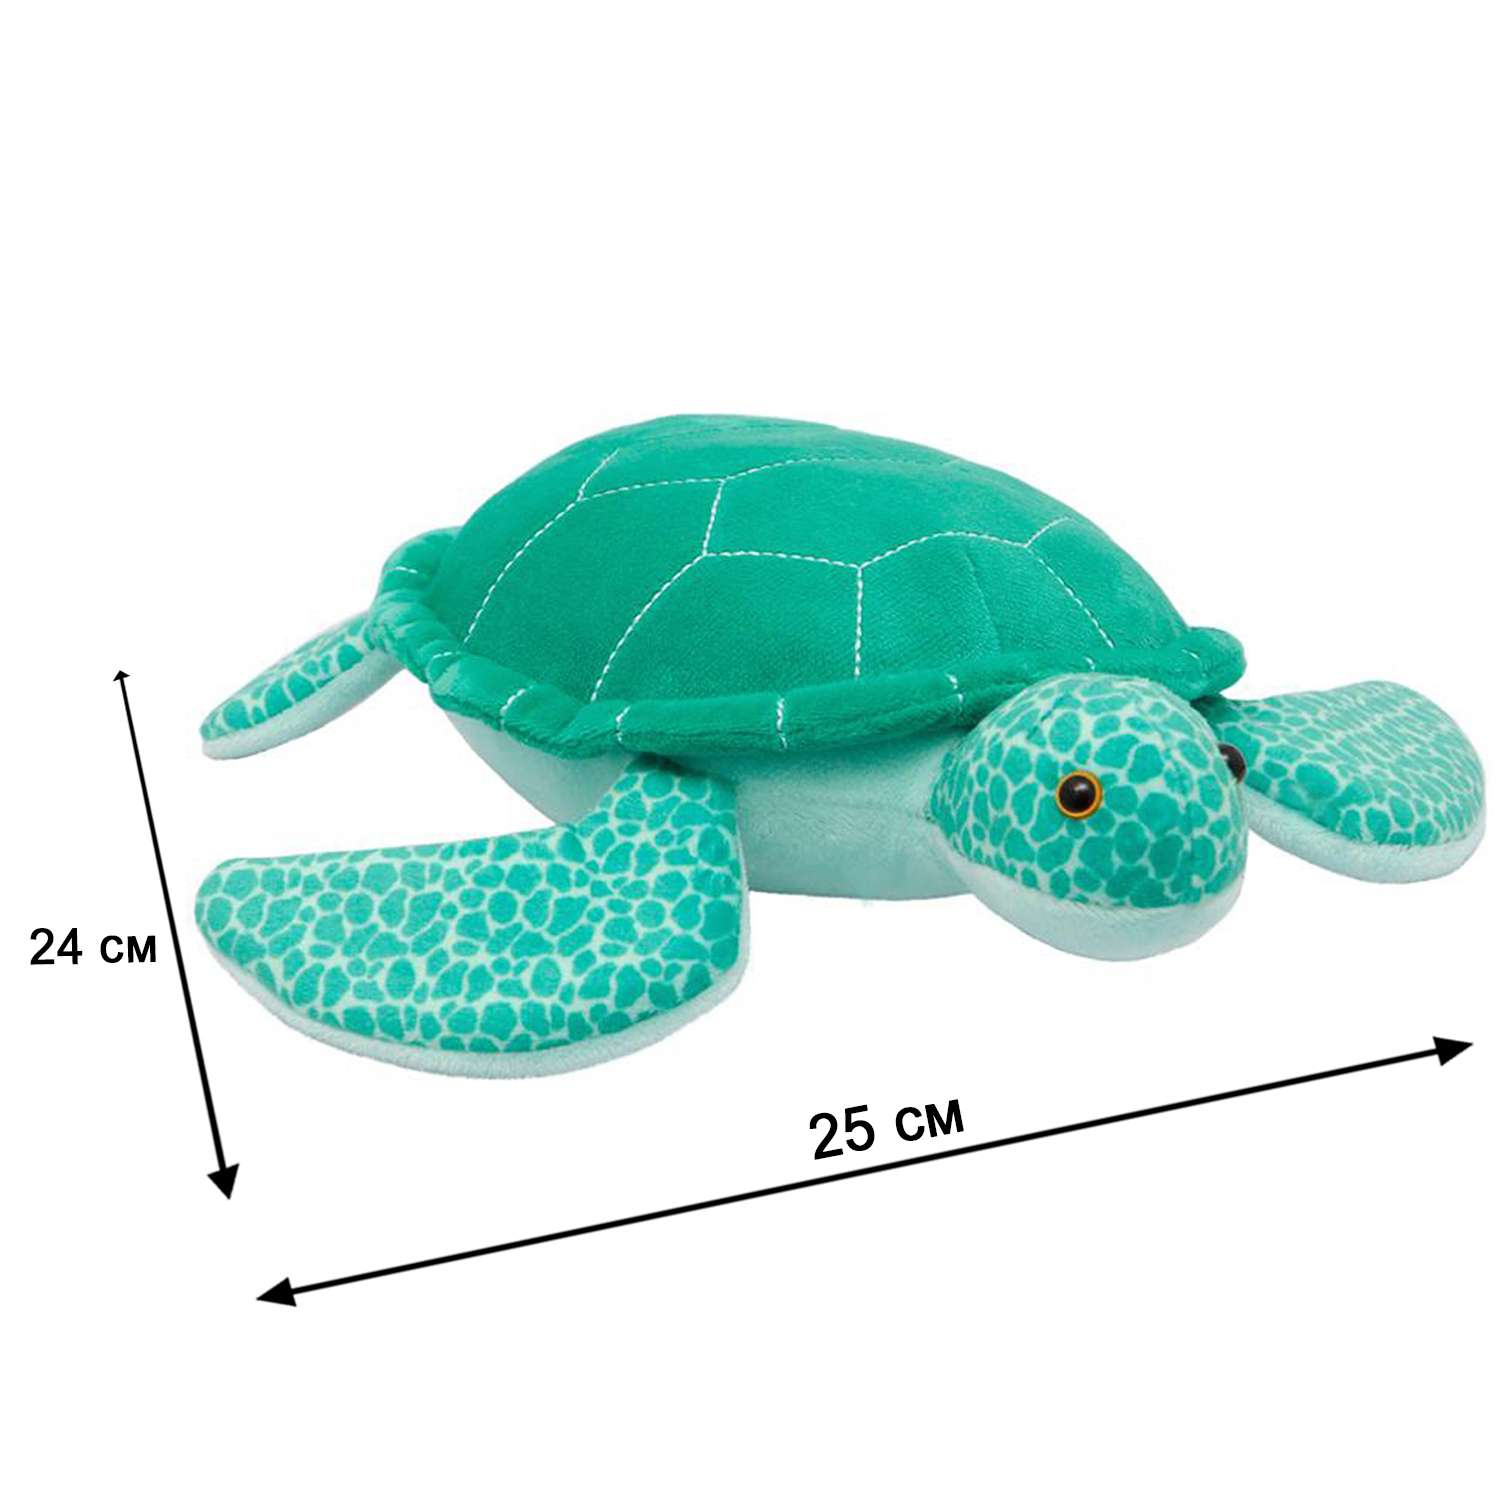 Мягкая игрушка All About Nature Зелёная морская черепаха 25 см. K8790-PT - фото 2